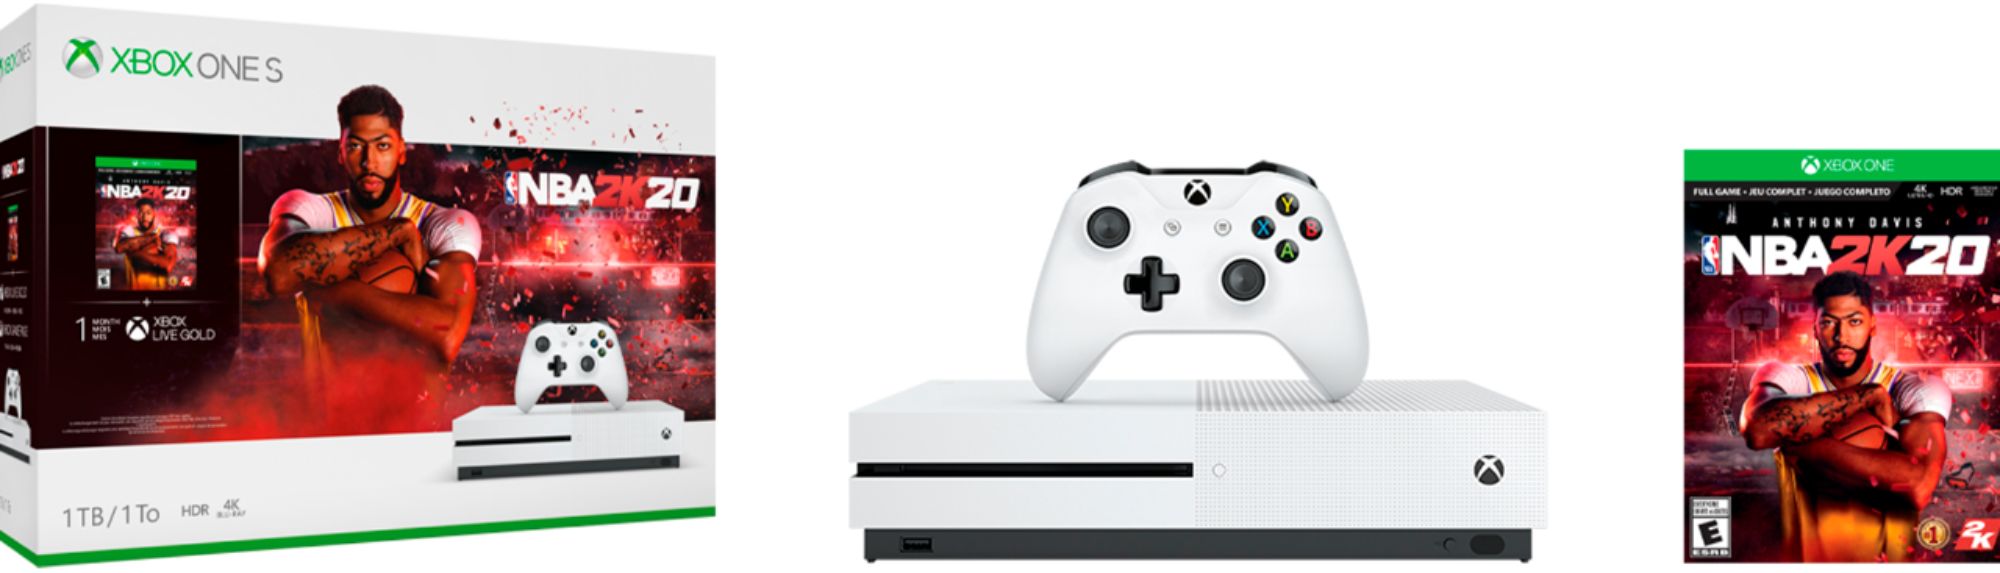 Microsoft Xbox One S 1tb Nba 2k20 Bundle White 234 00998 Best Buy - xbox 360 roblox esrb e for everyone fav roblox